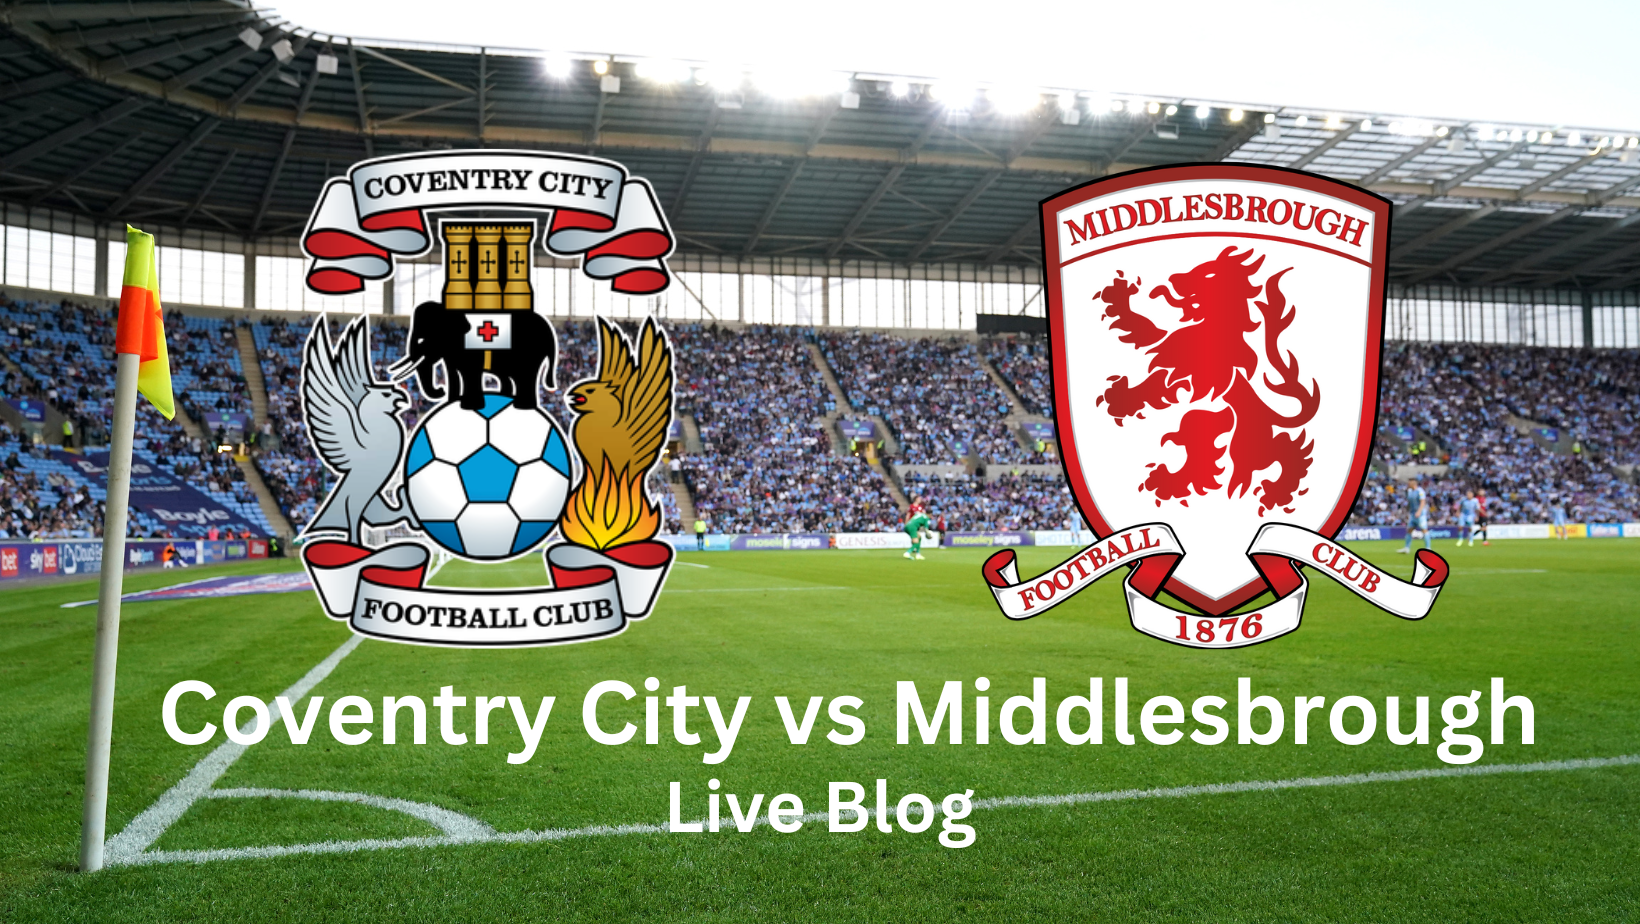 LIVE BLOG: Coventry City vs Middlesbrough